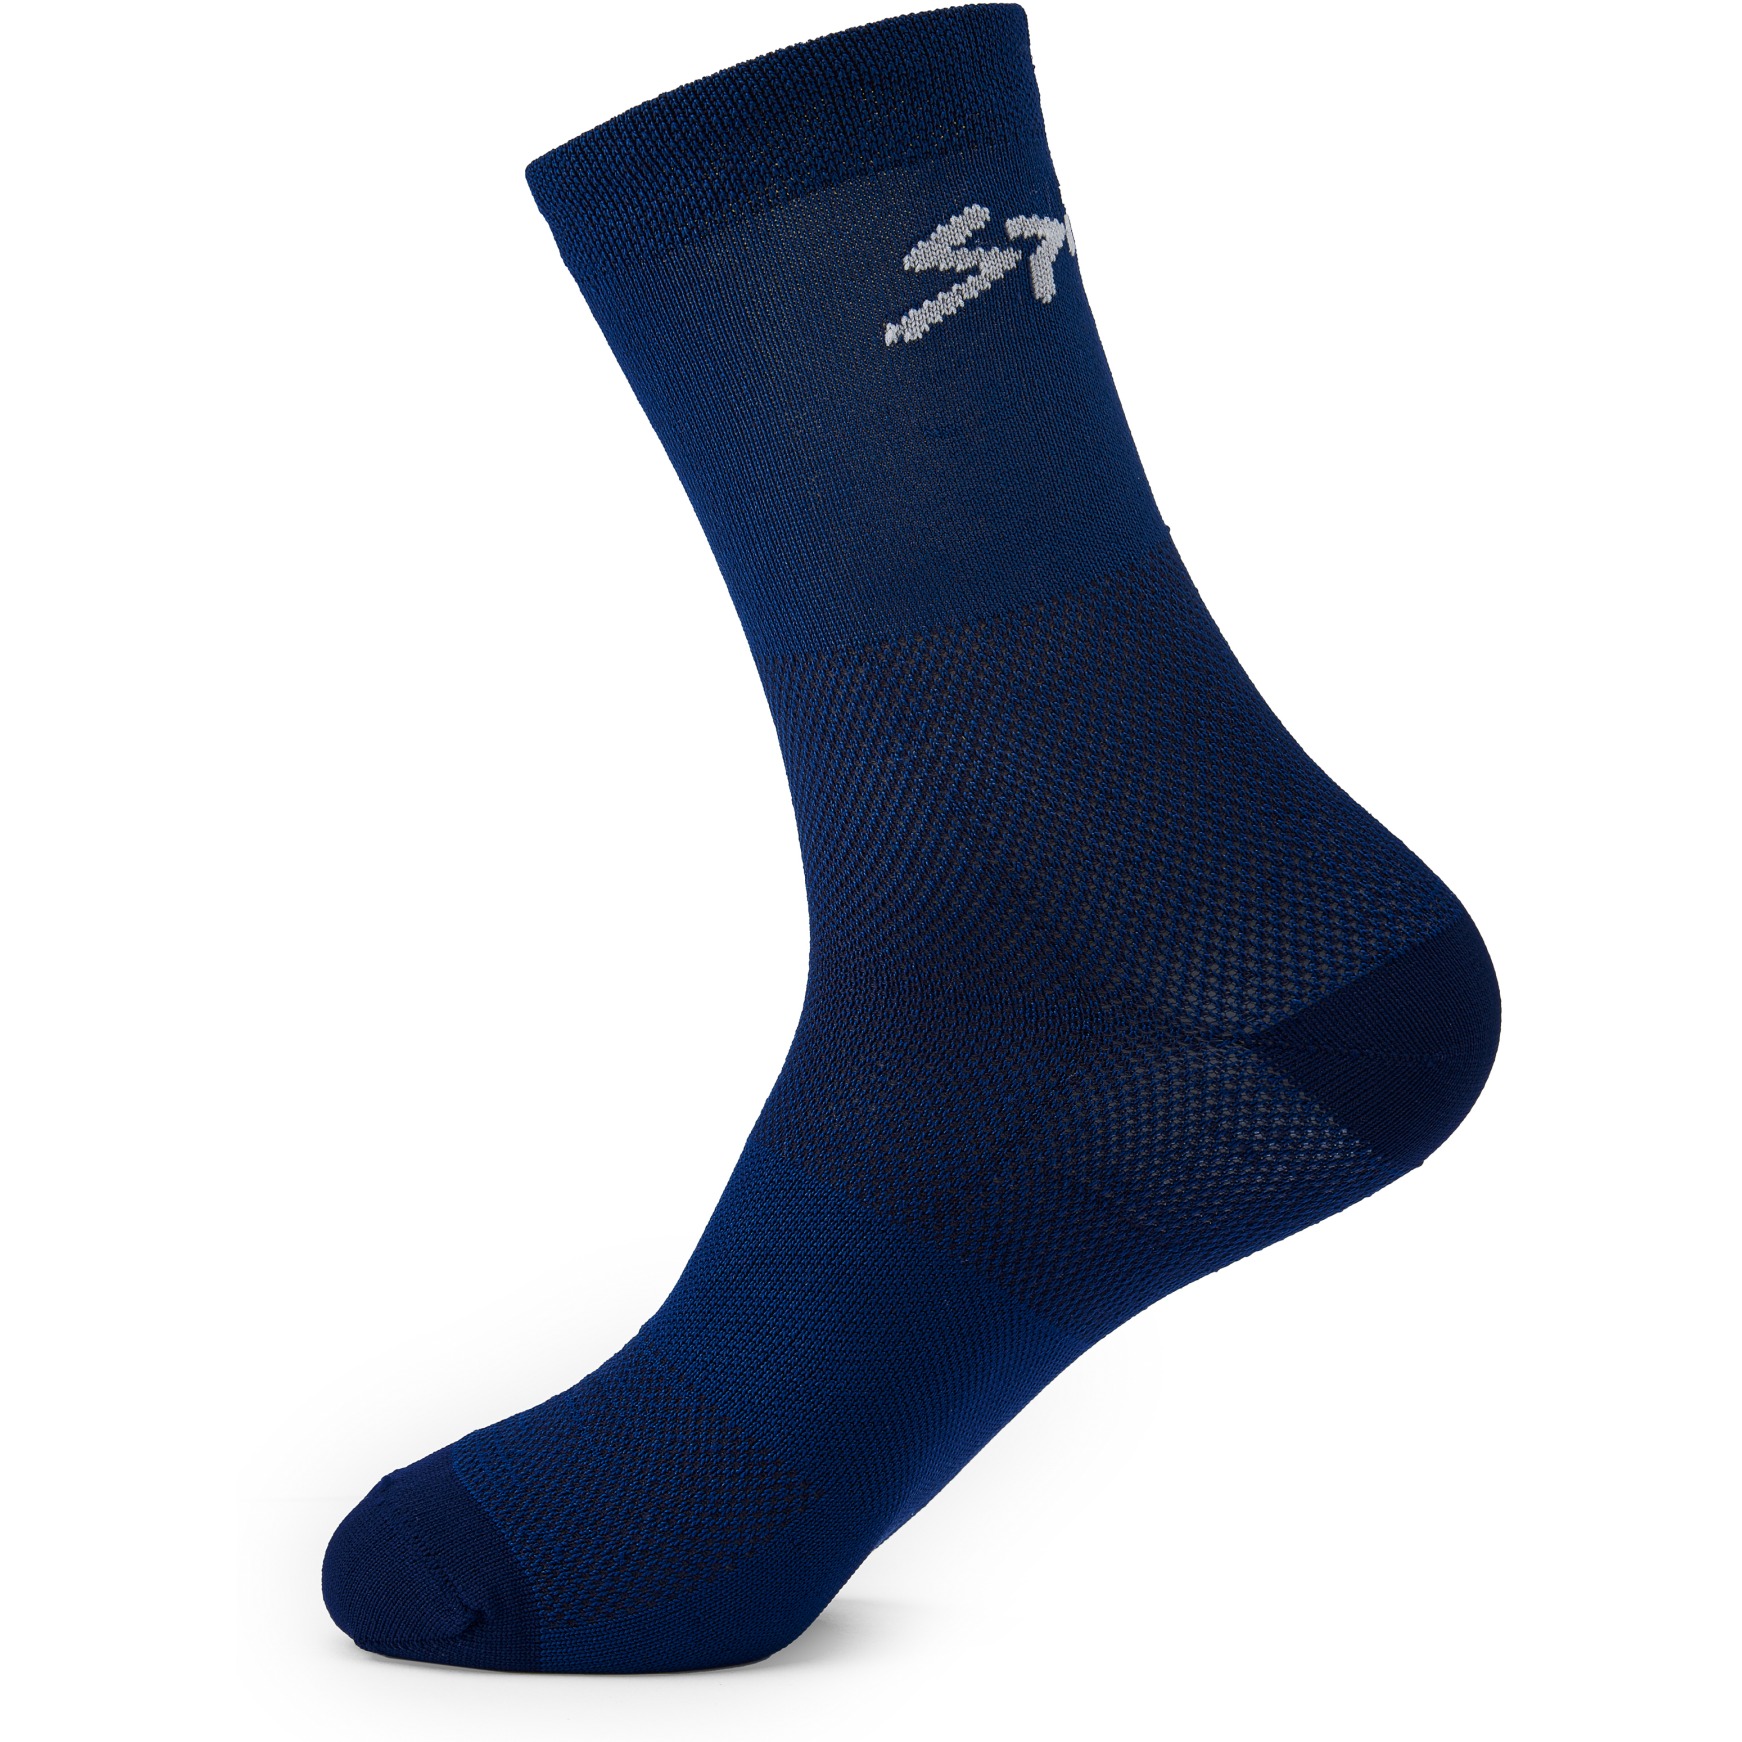 Produktbild von Spiuk ANATOMIC Socken 2er Pack - dunkelblau